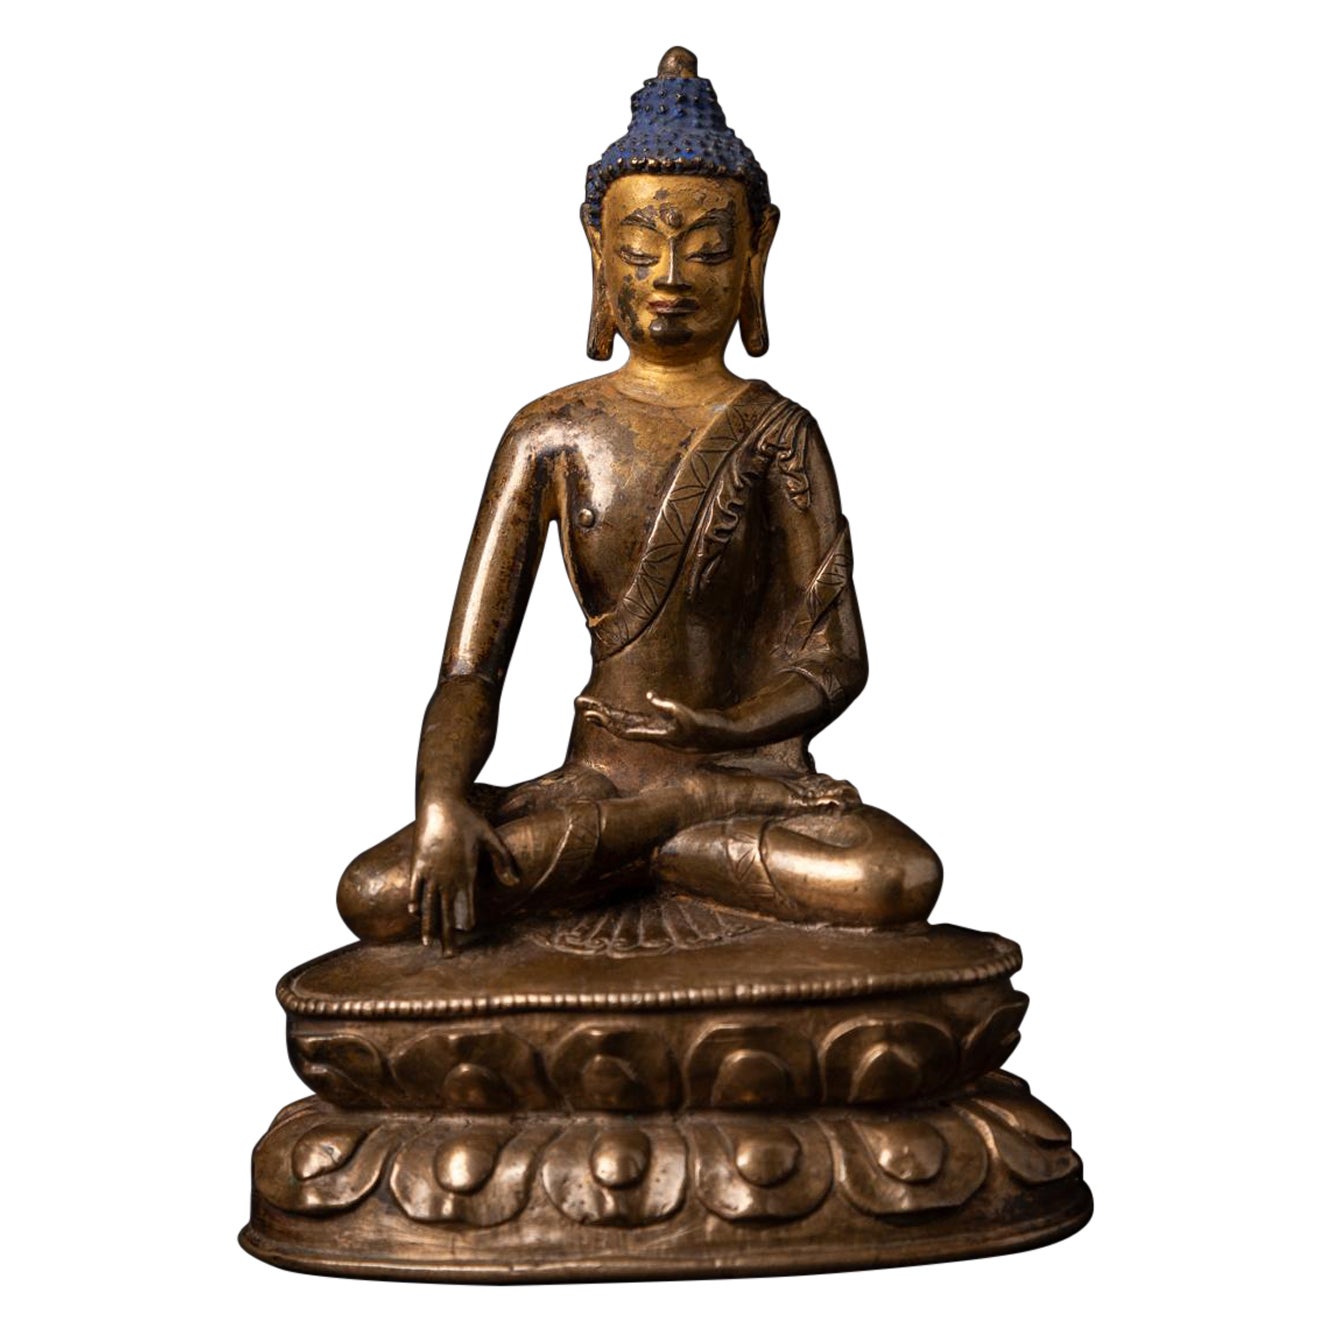 15th century Very special antique Tibetan Buddha statue in Bhumisparsha Mudra